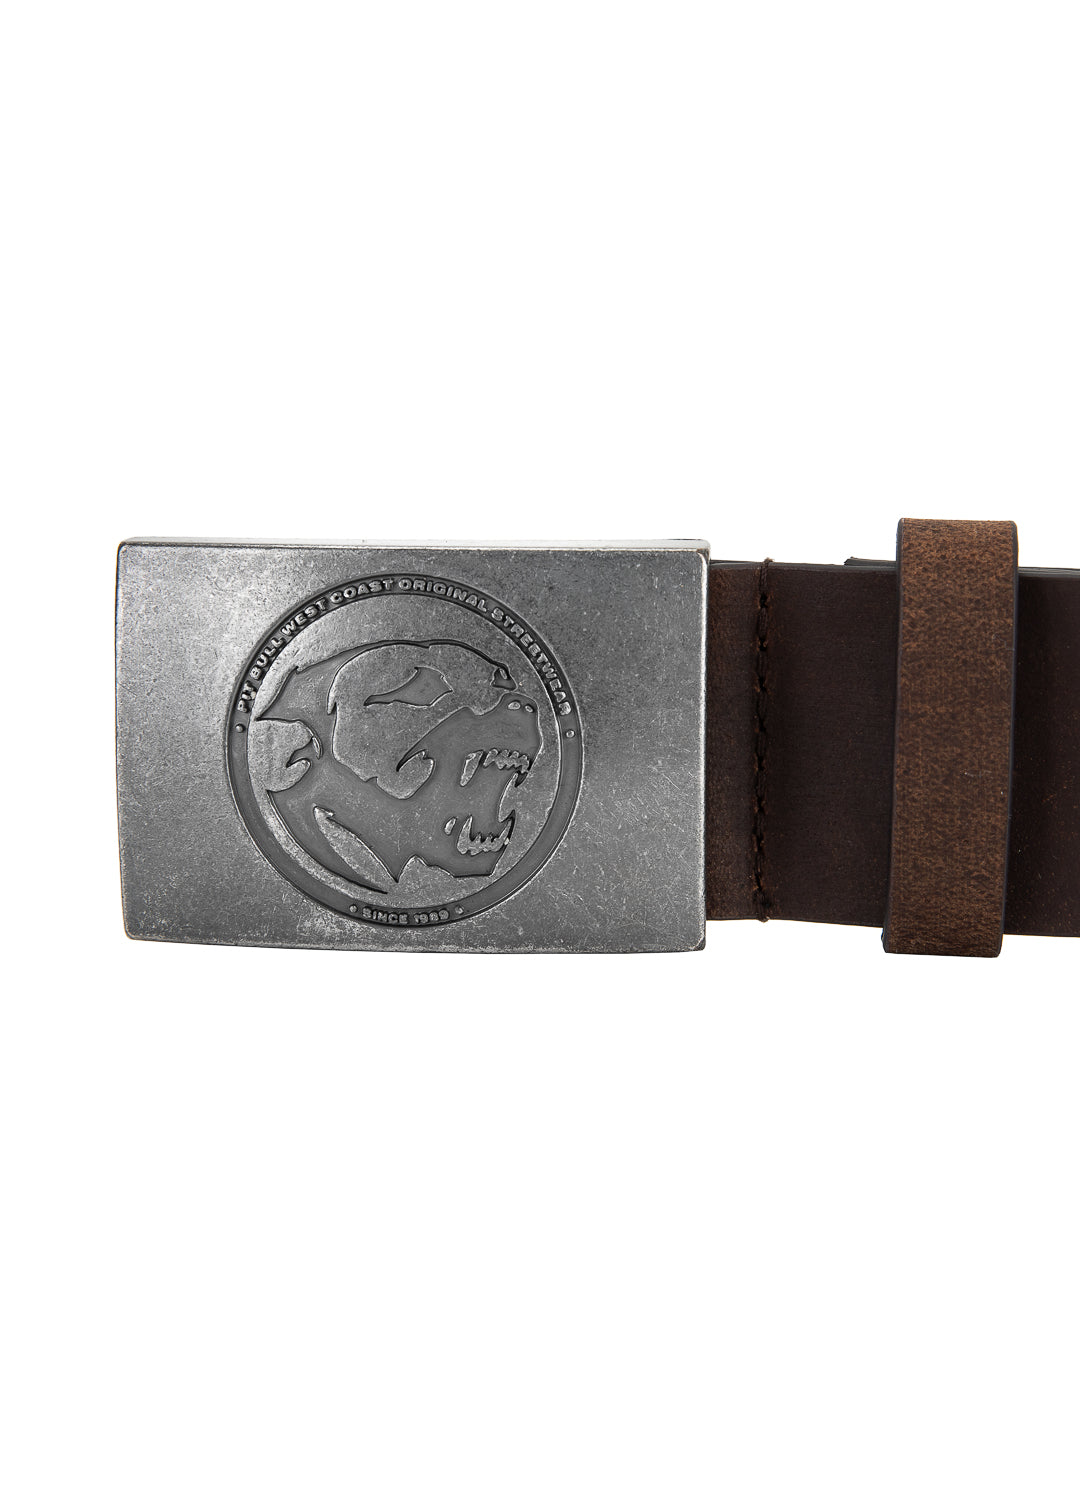 BONES Brown Leather Belt.